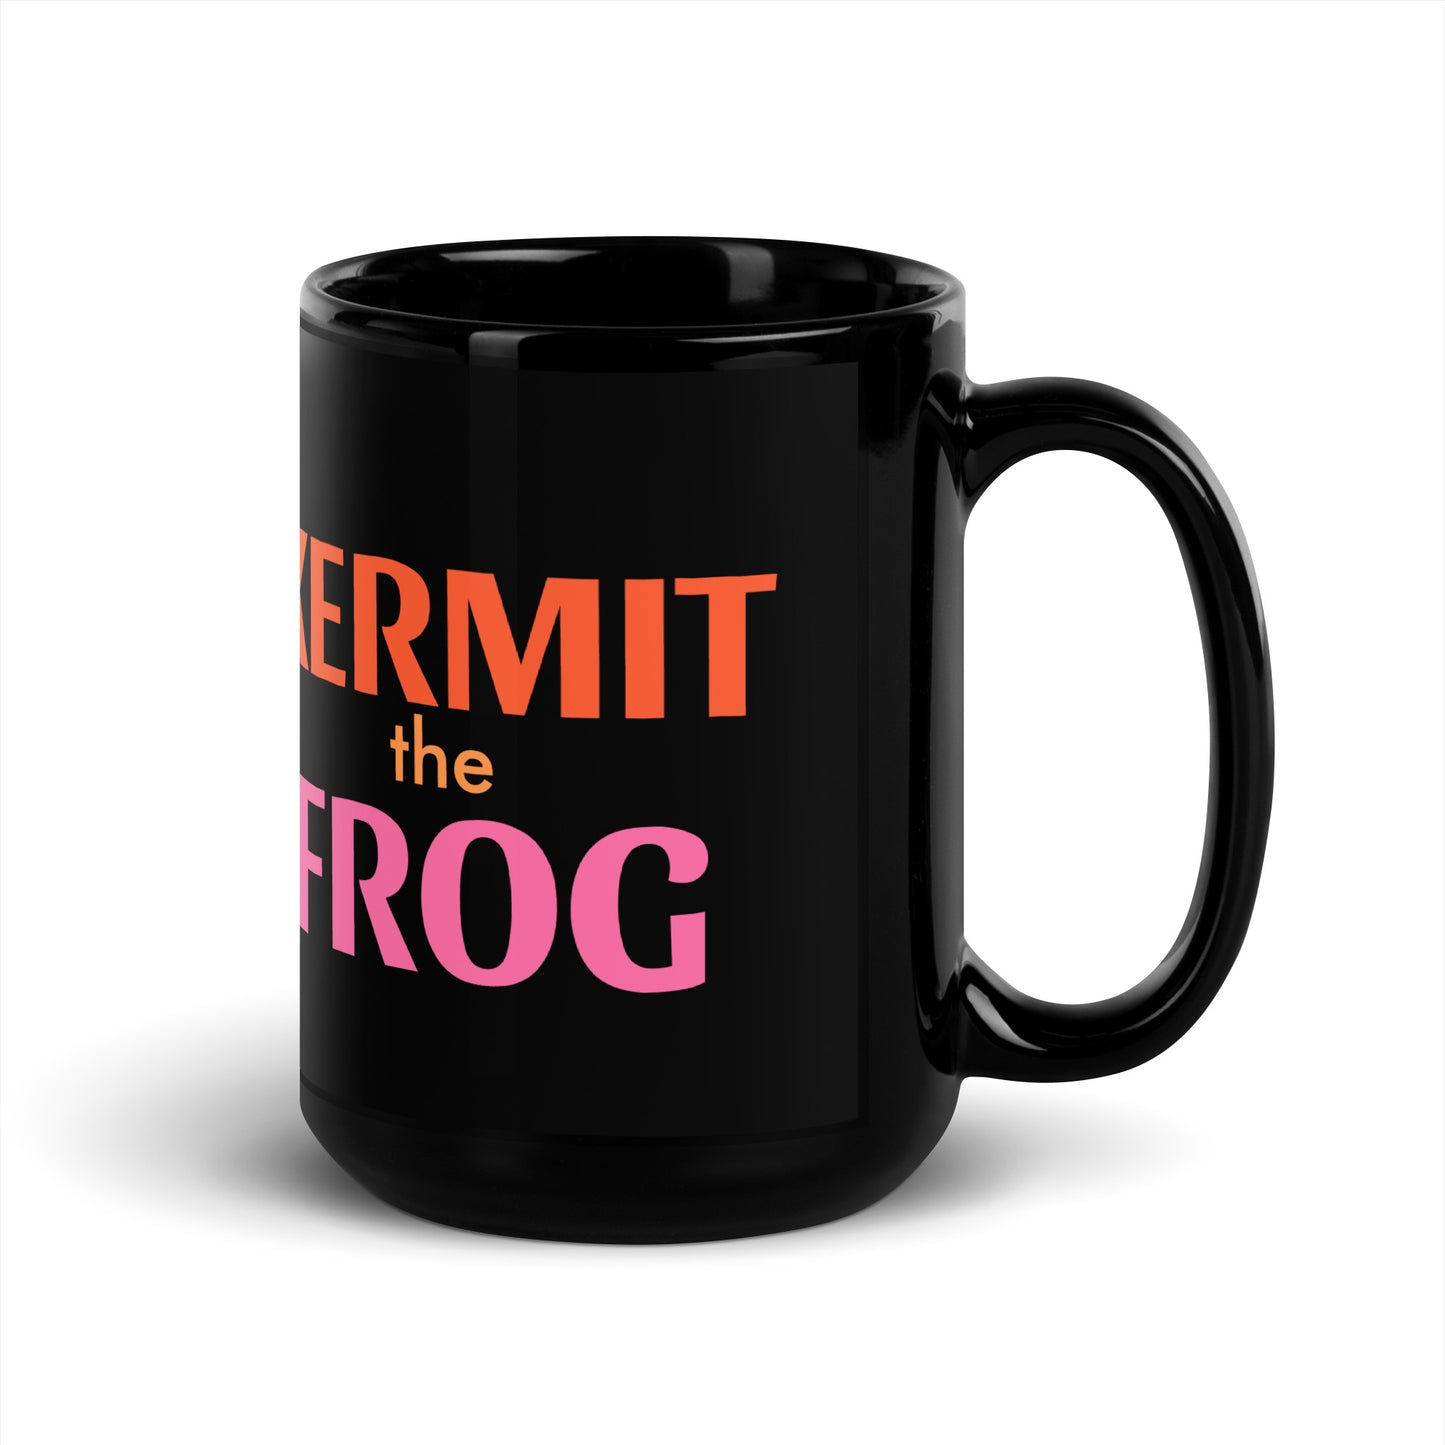 Kermit the FrogBlack Glossy Mug